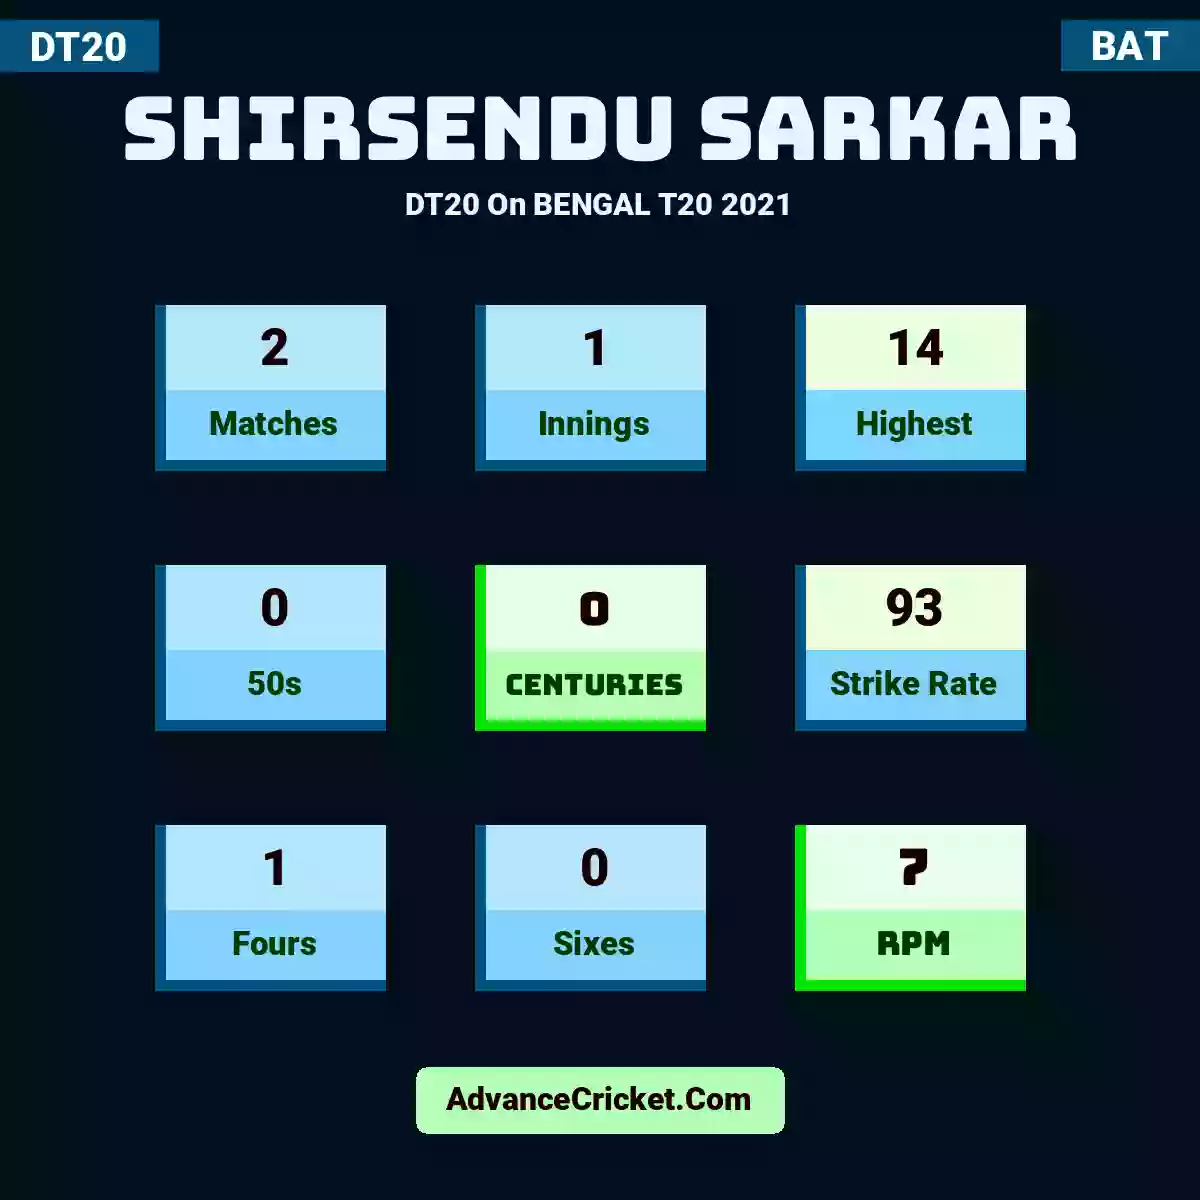 Shirsendu Sarkar DT20  On BENGAL T20 2021, Shirsendu Sarkar played 2 matches, scored 14 runs as highest, 0 half-centuries, and 0 centuries, with a strike rate of 93. S.Sarkar hit 1 fours and 0 sixes, with an RPM of 7.